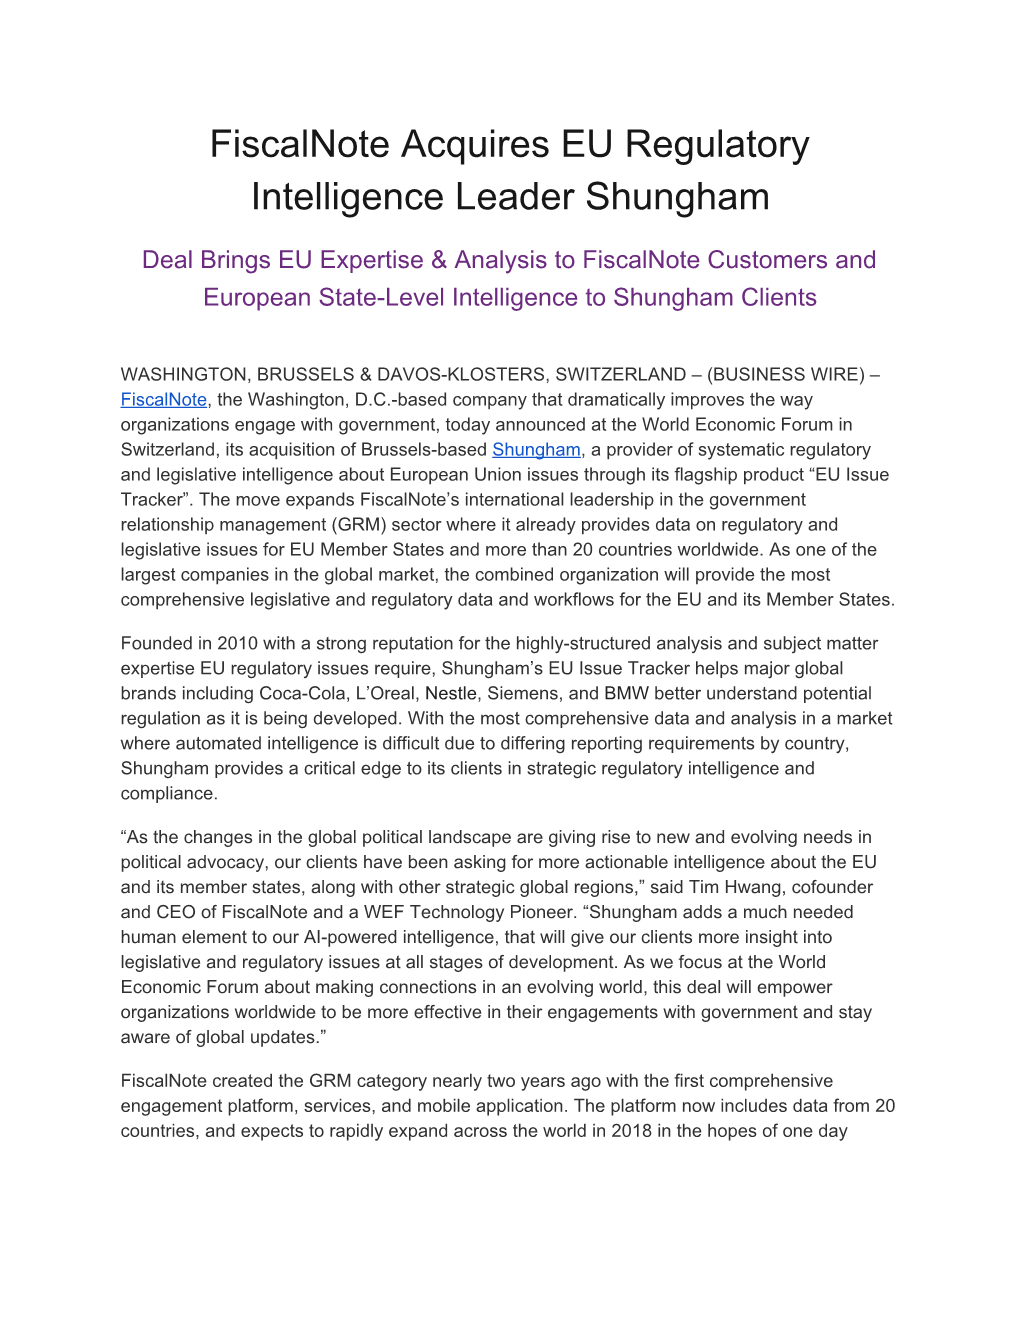 Fiscalnote Acquires EU Regulatory Intelligence Leader Shungham